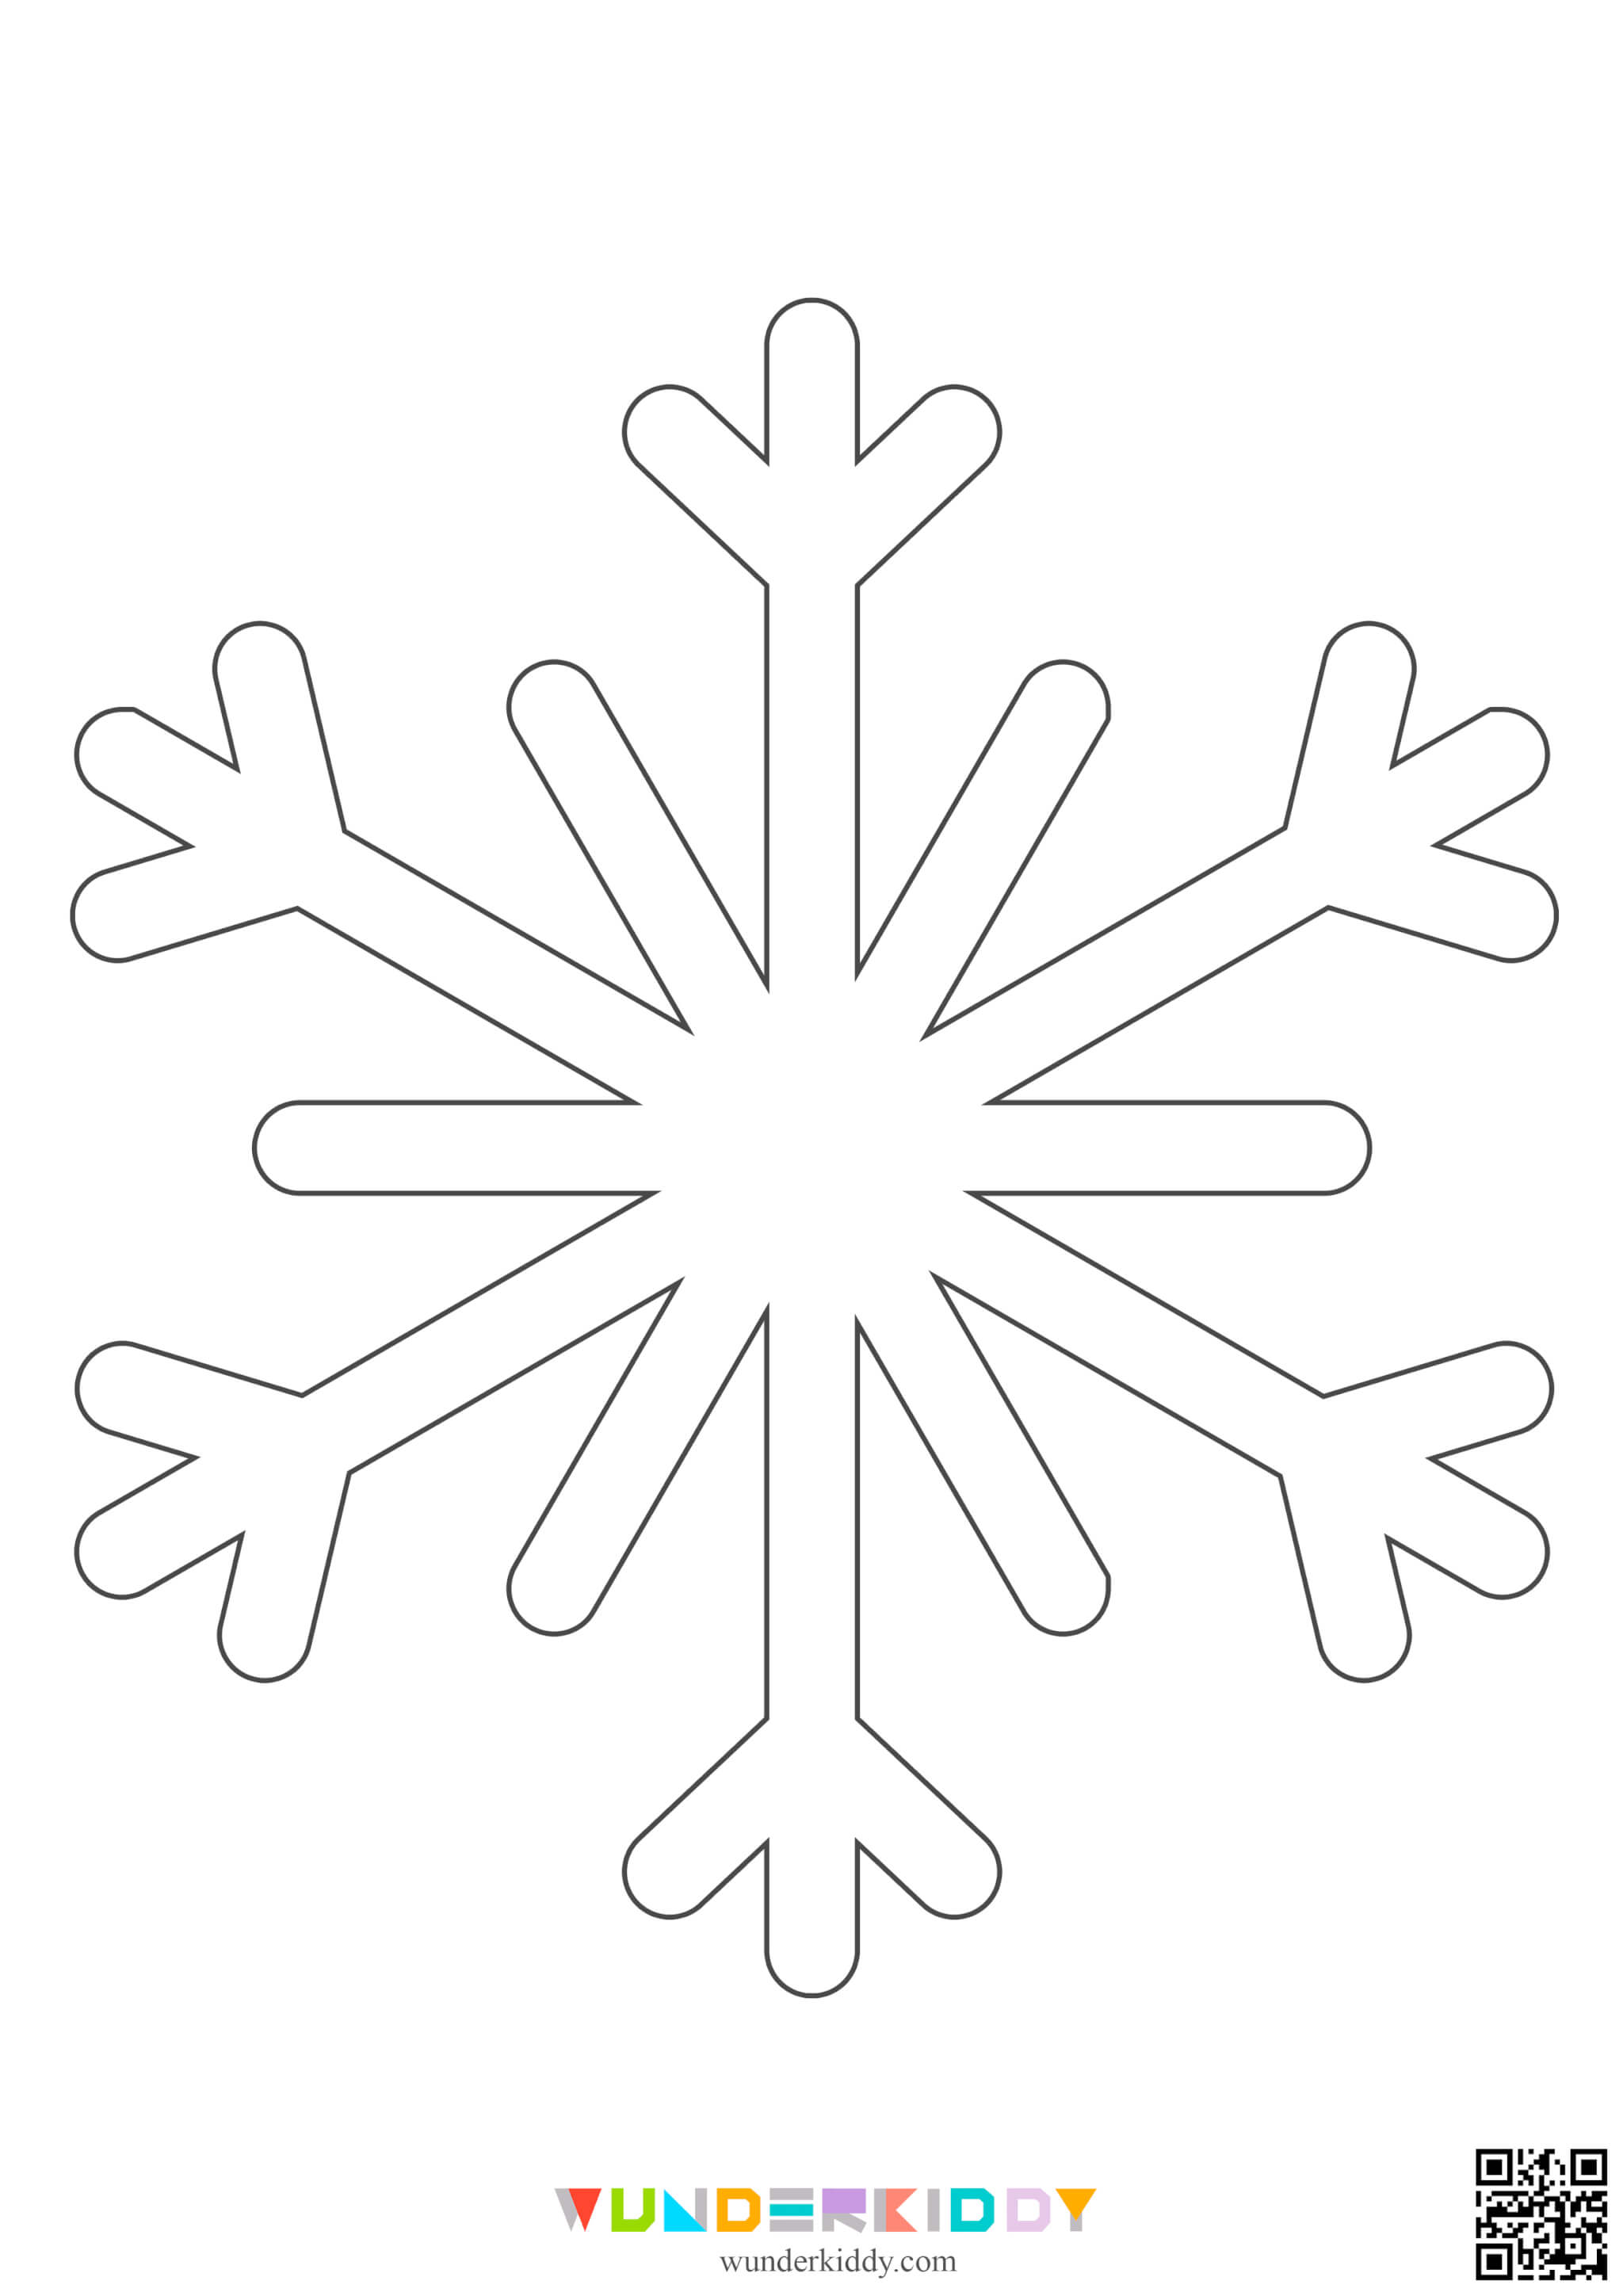 Snowflake Stencil Patterns - Image 4